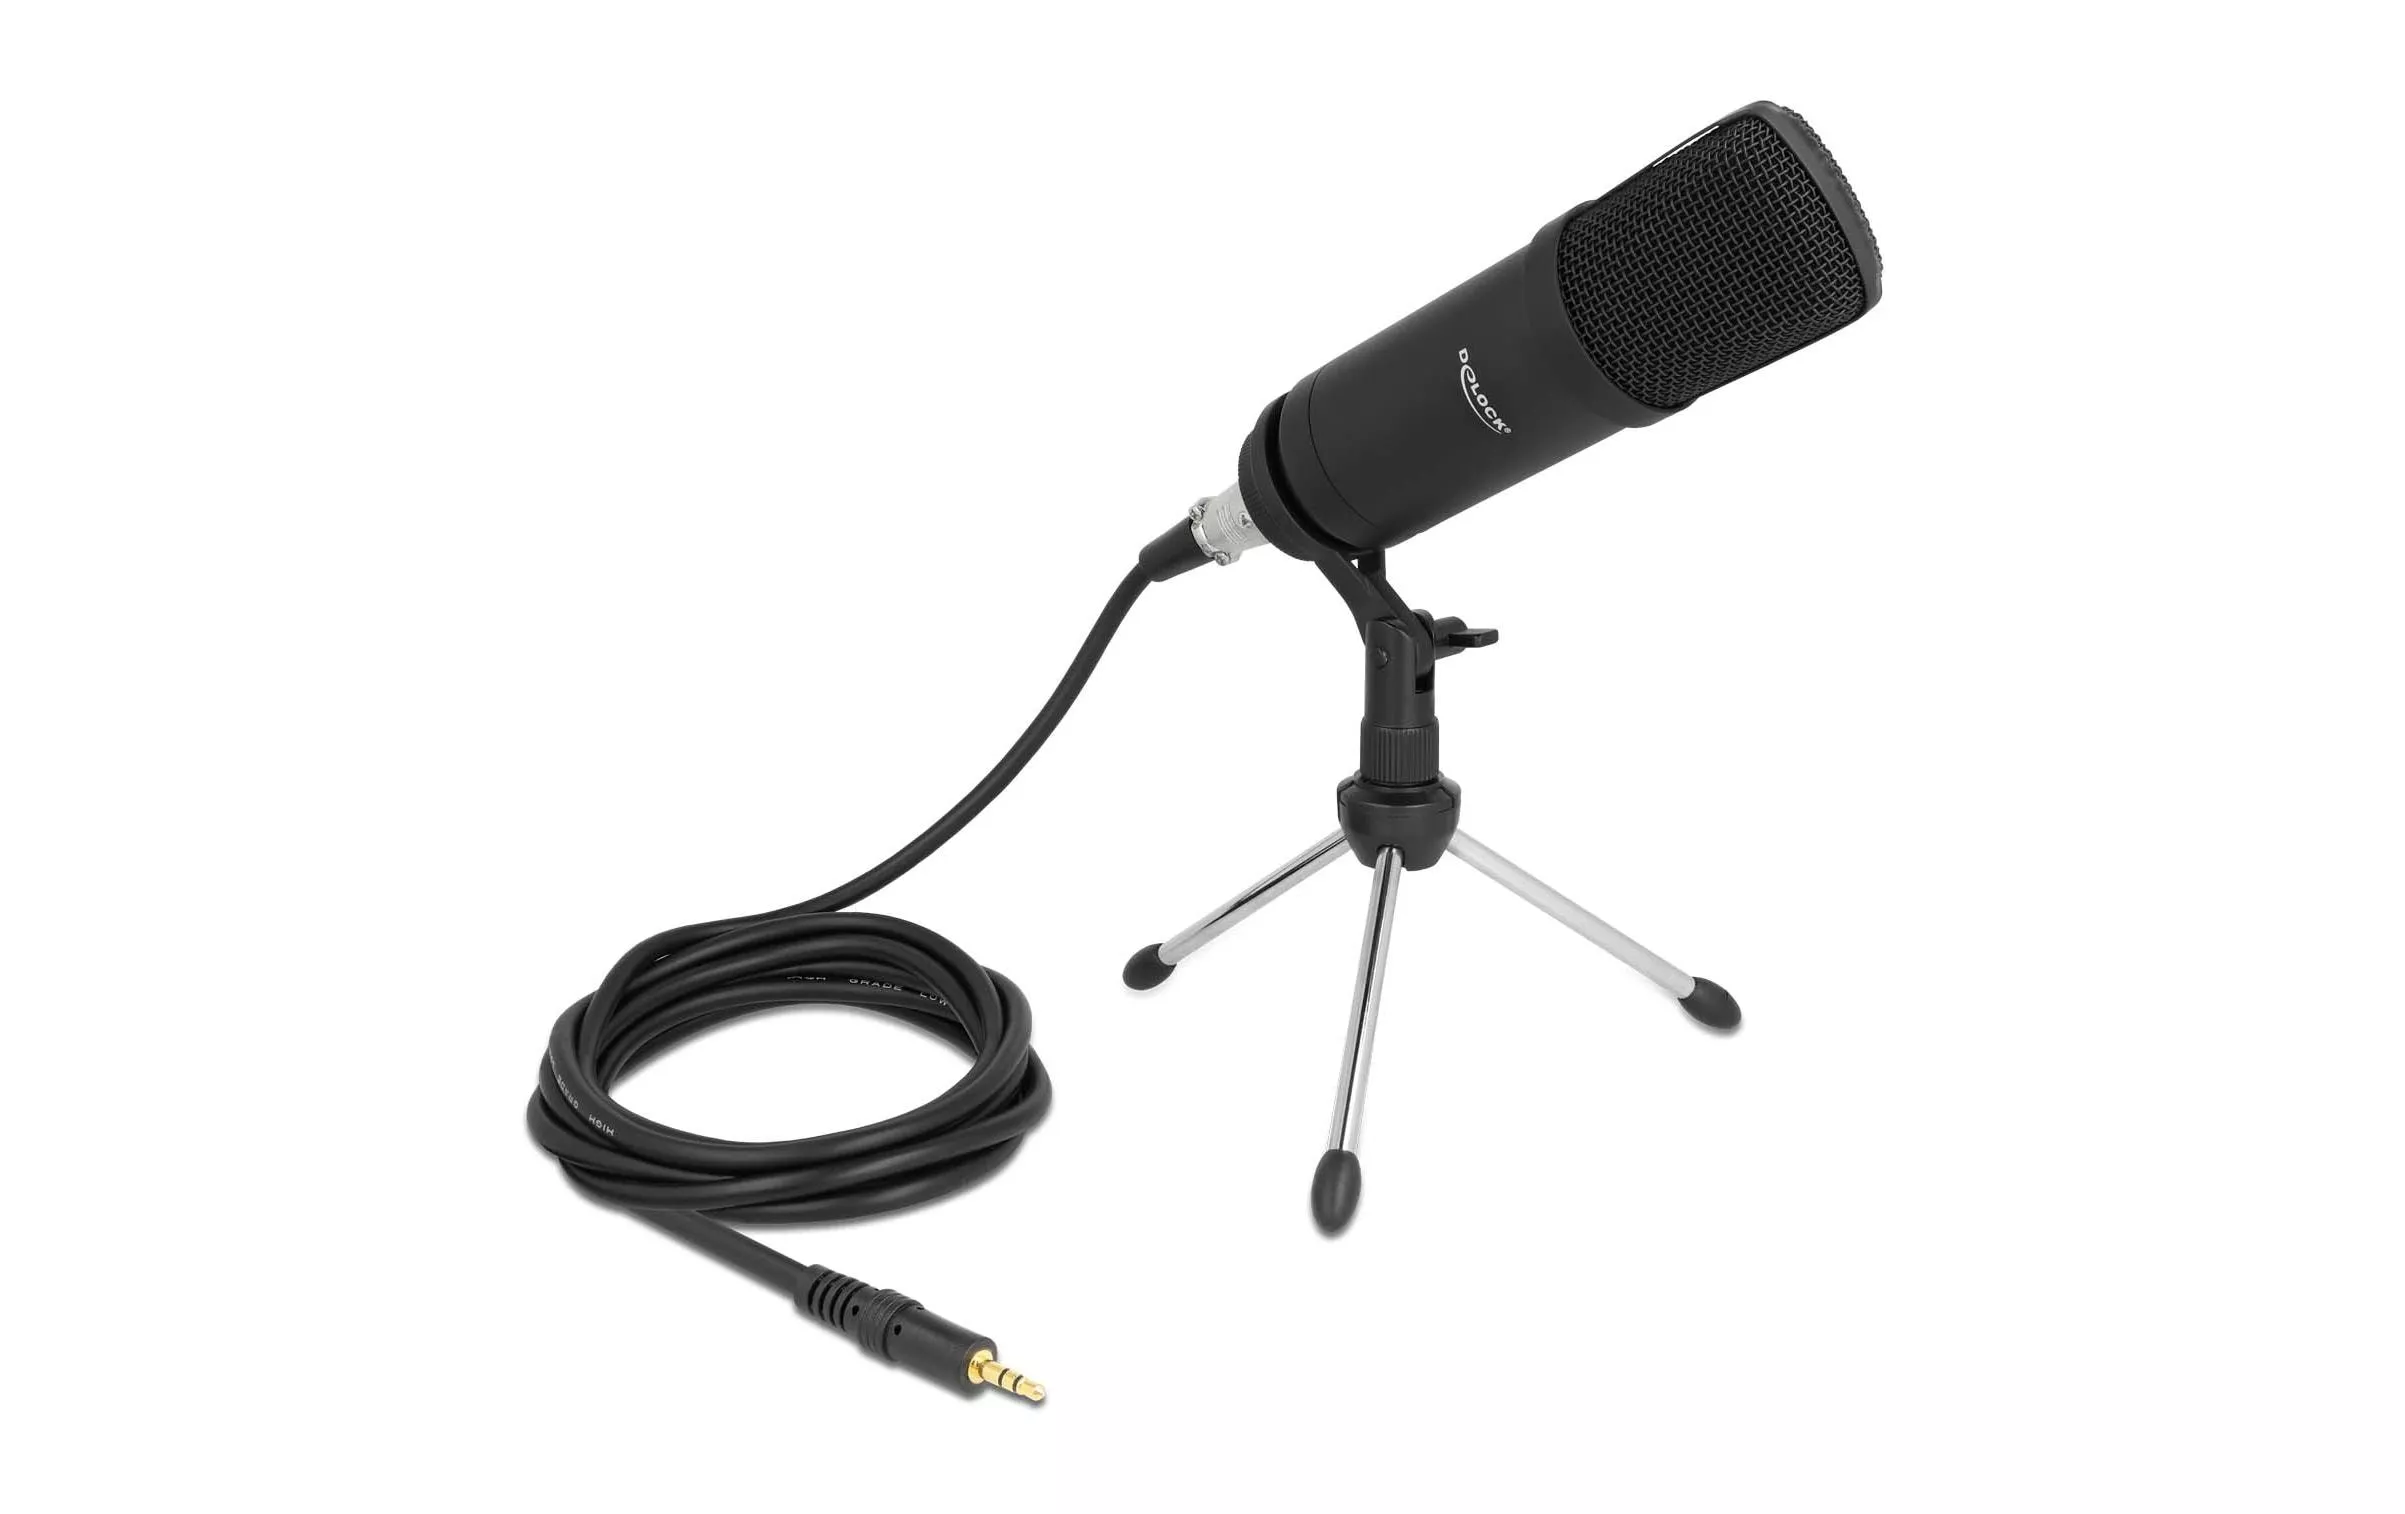 Mikrofon für Podcasting mit XLR Anschluss/3.5mm Klinke